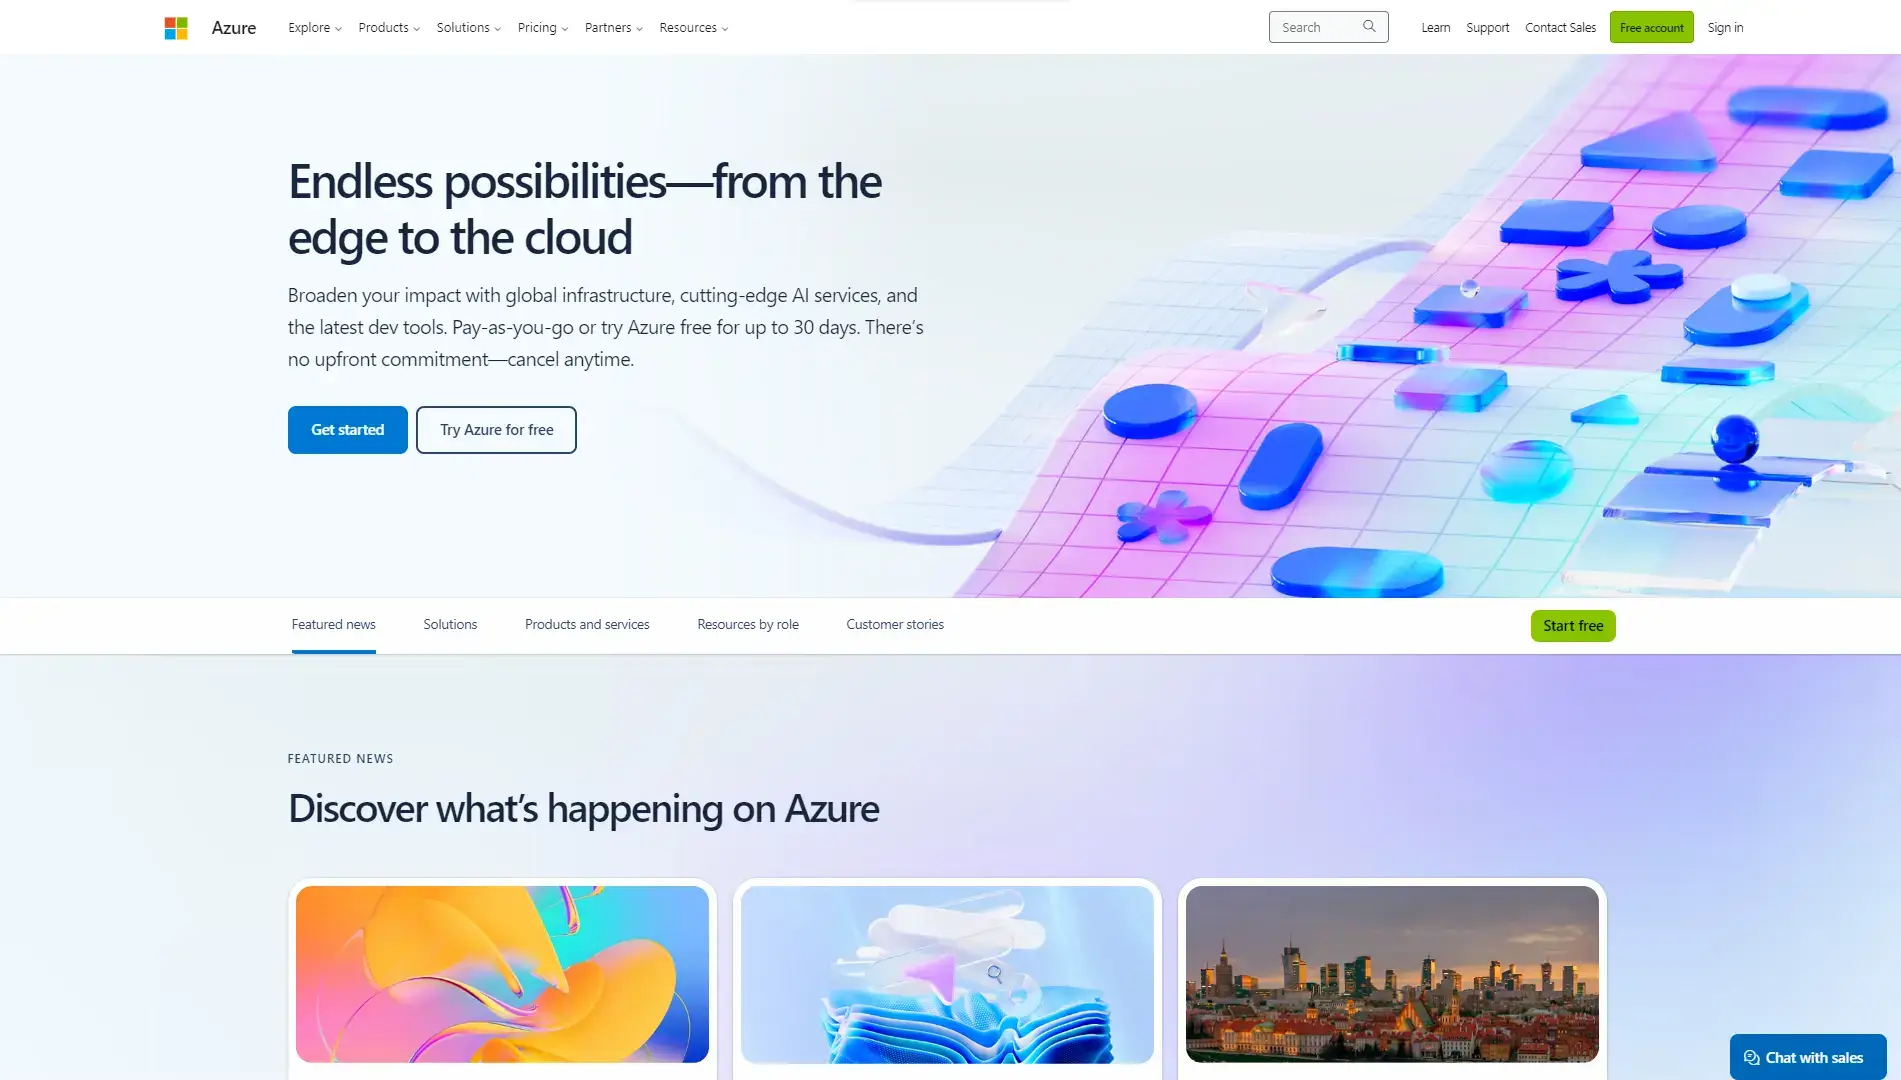 Microsoft Azure's website homepage.